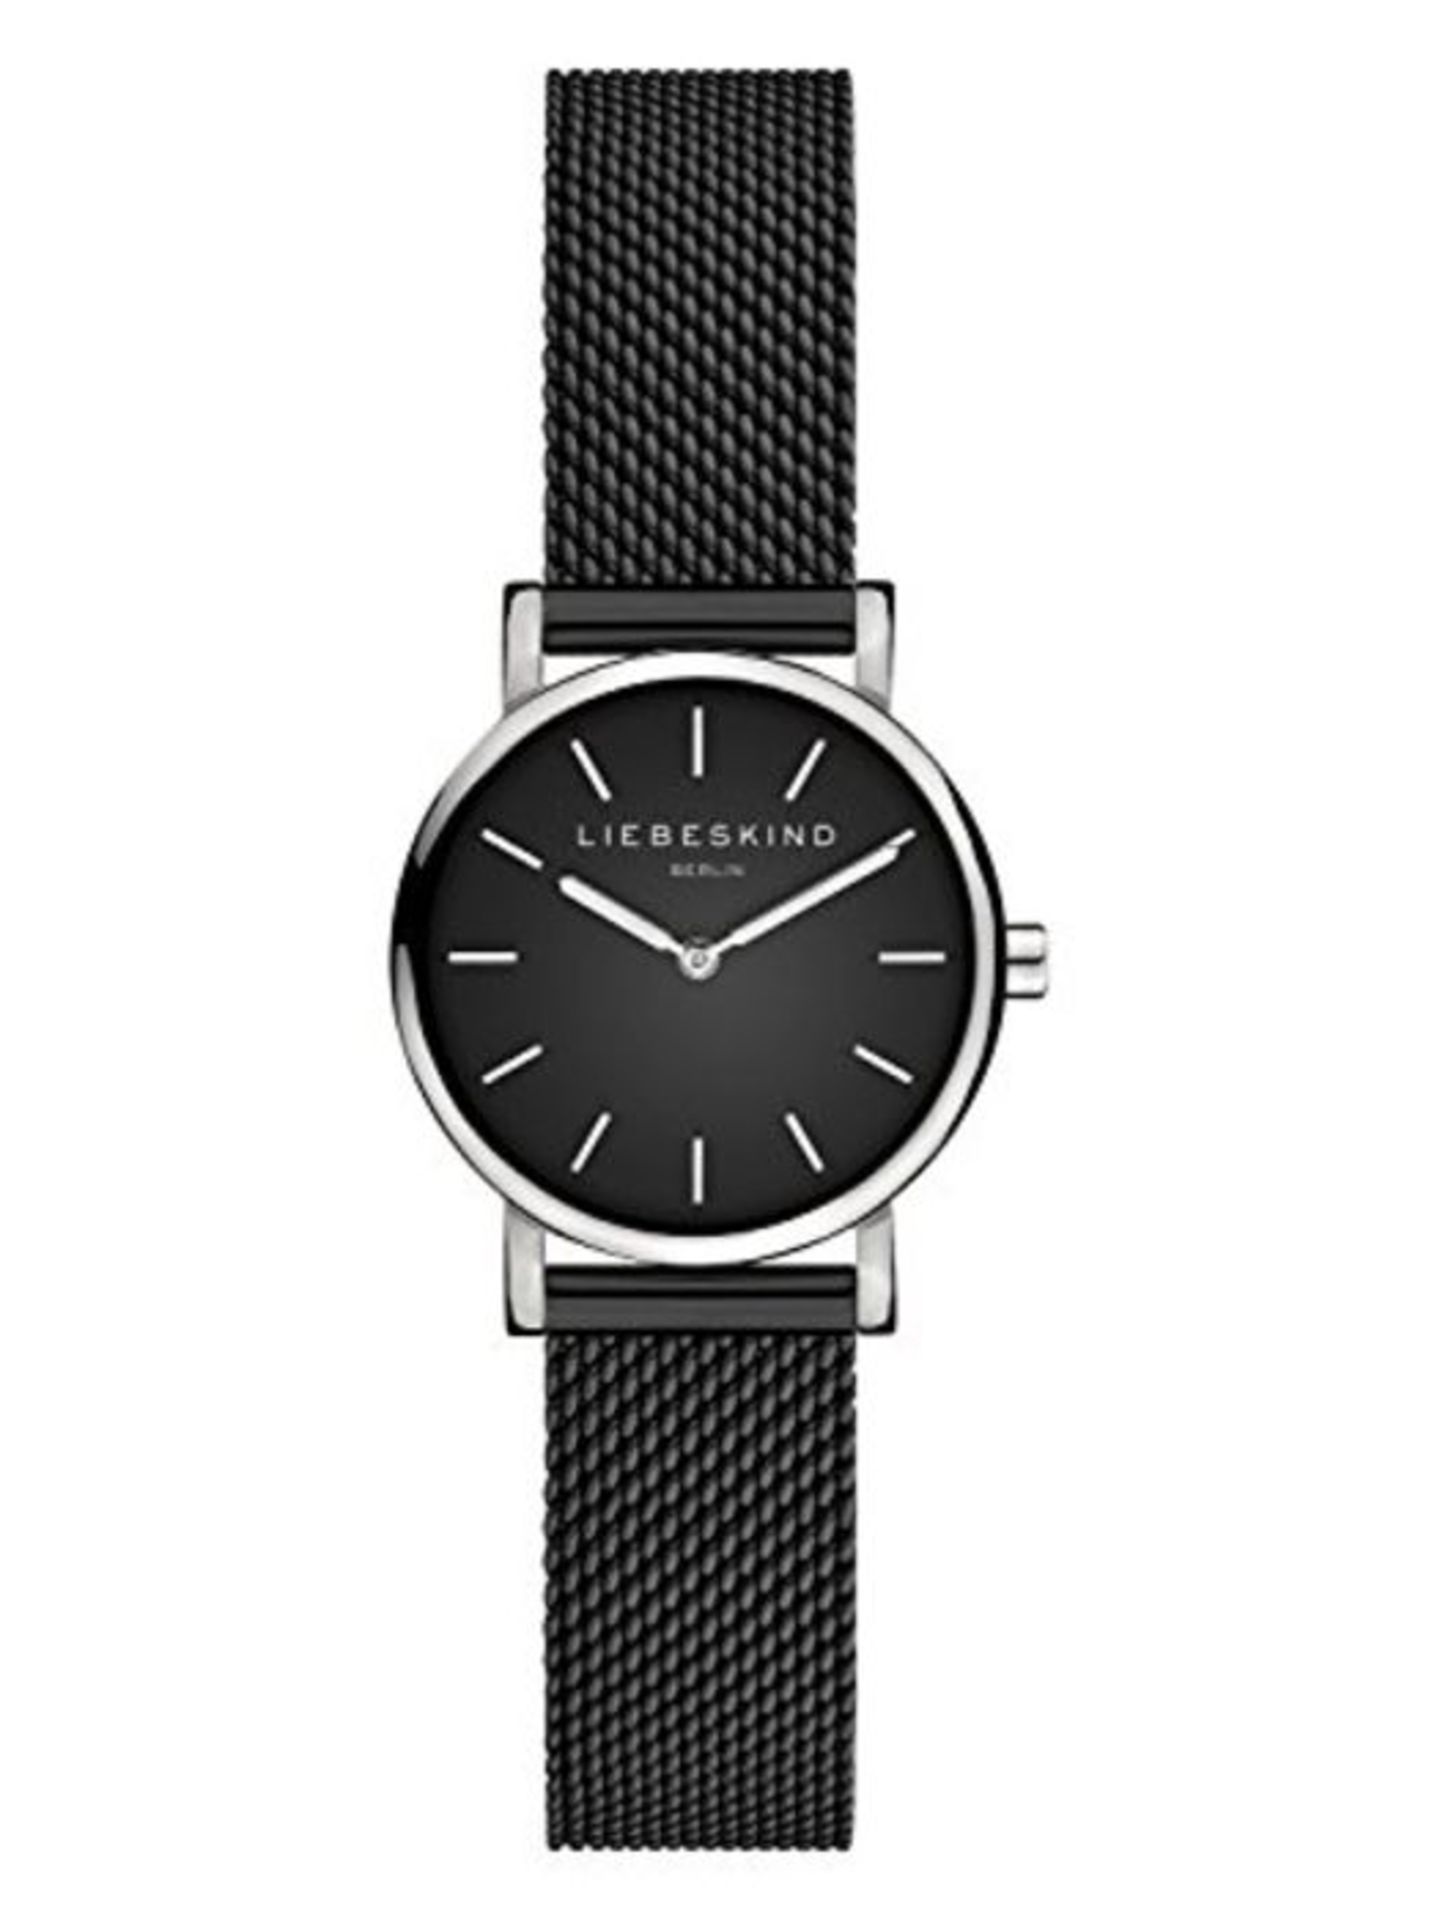 RRP £93.00 Liebeskind Berlin ladies analogue quartz watch with stainless steel bracelet